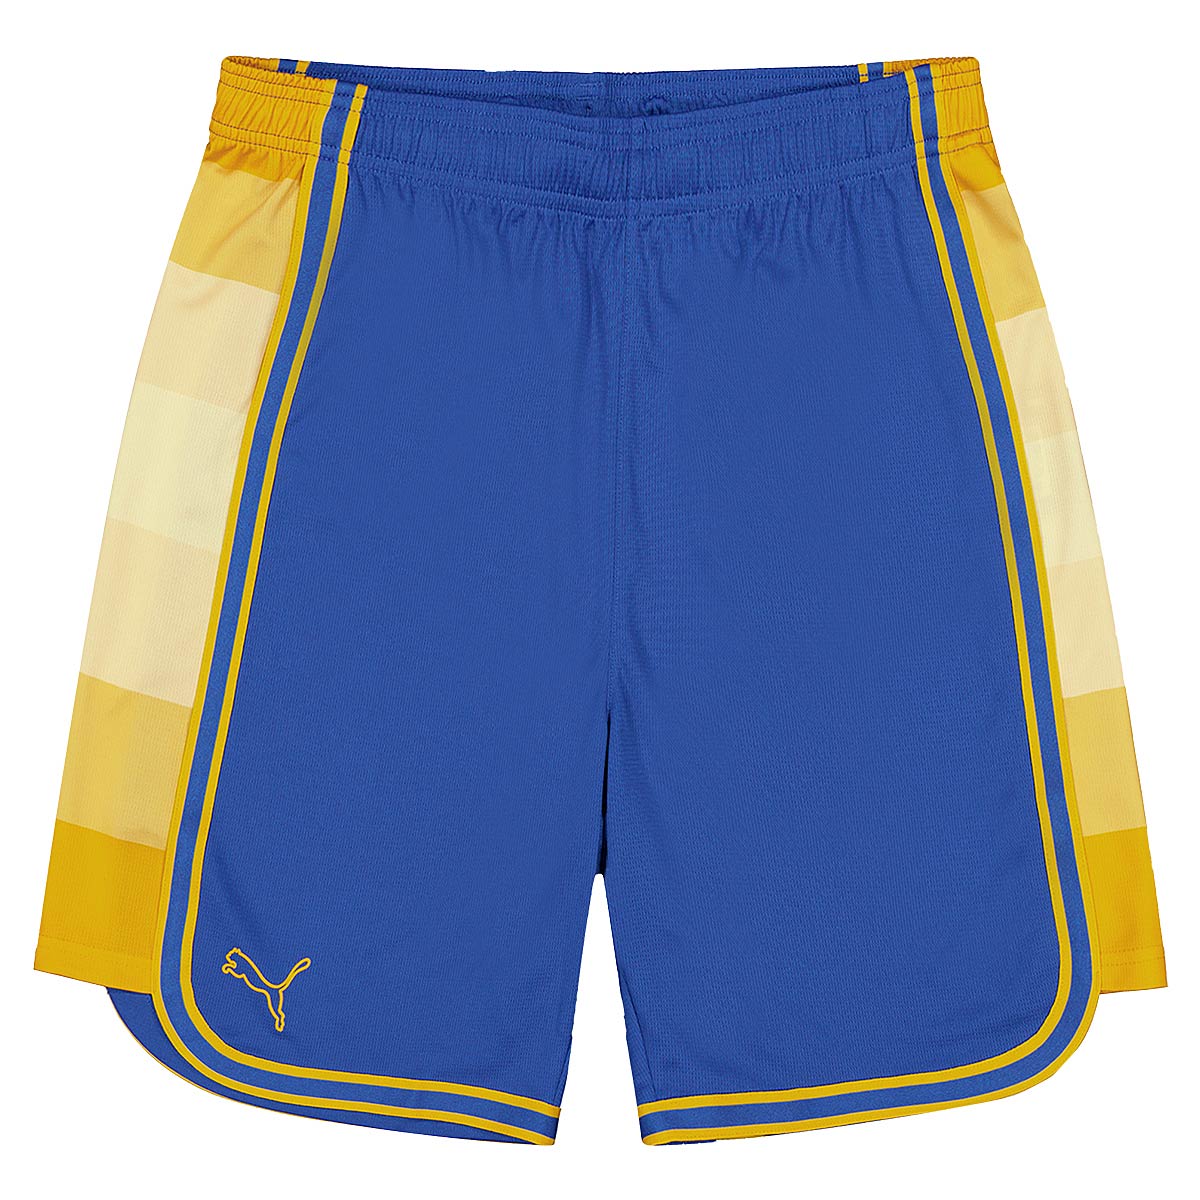 Image of Puma Maccabi Tel Aviv Basketball Game Shorts, Nautical Blue